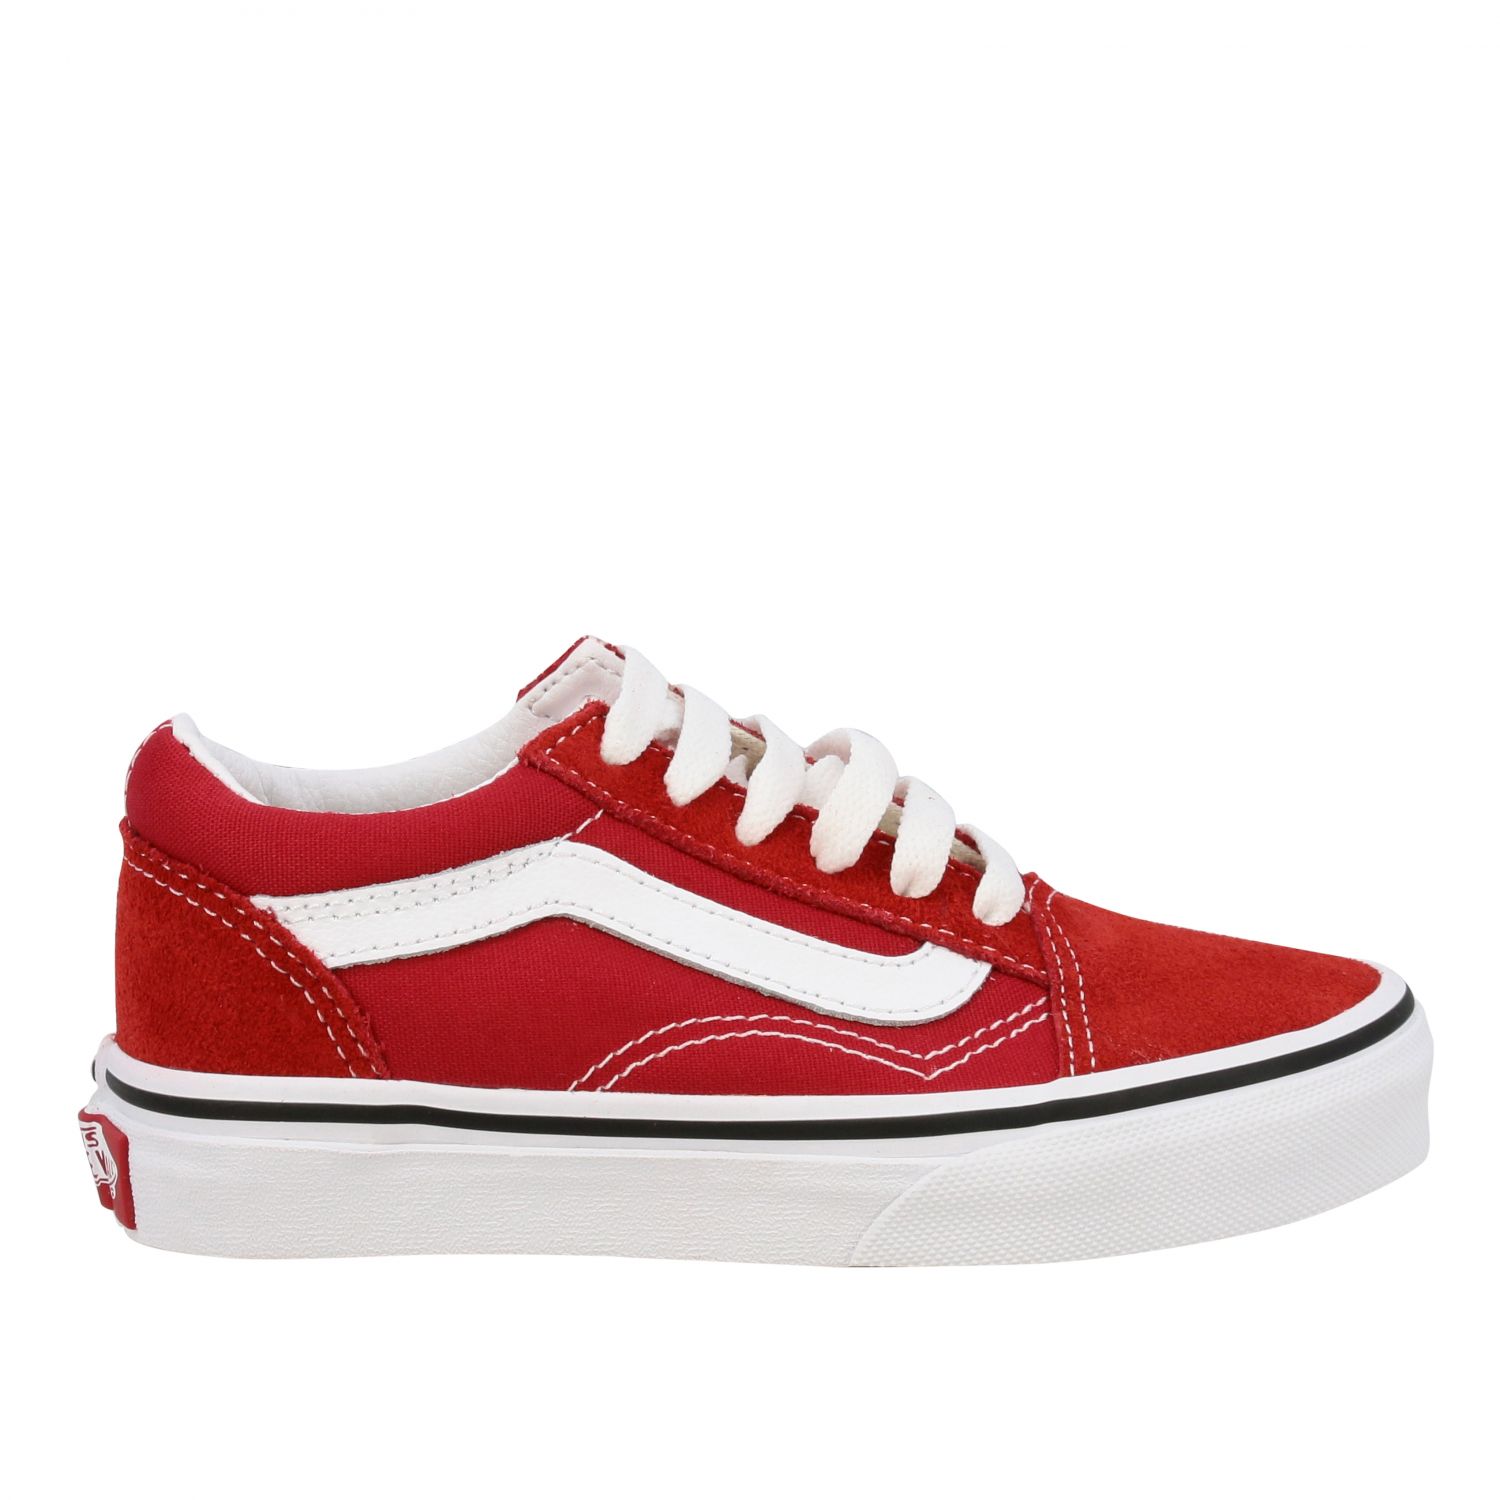 red vans shoes kids